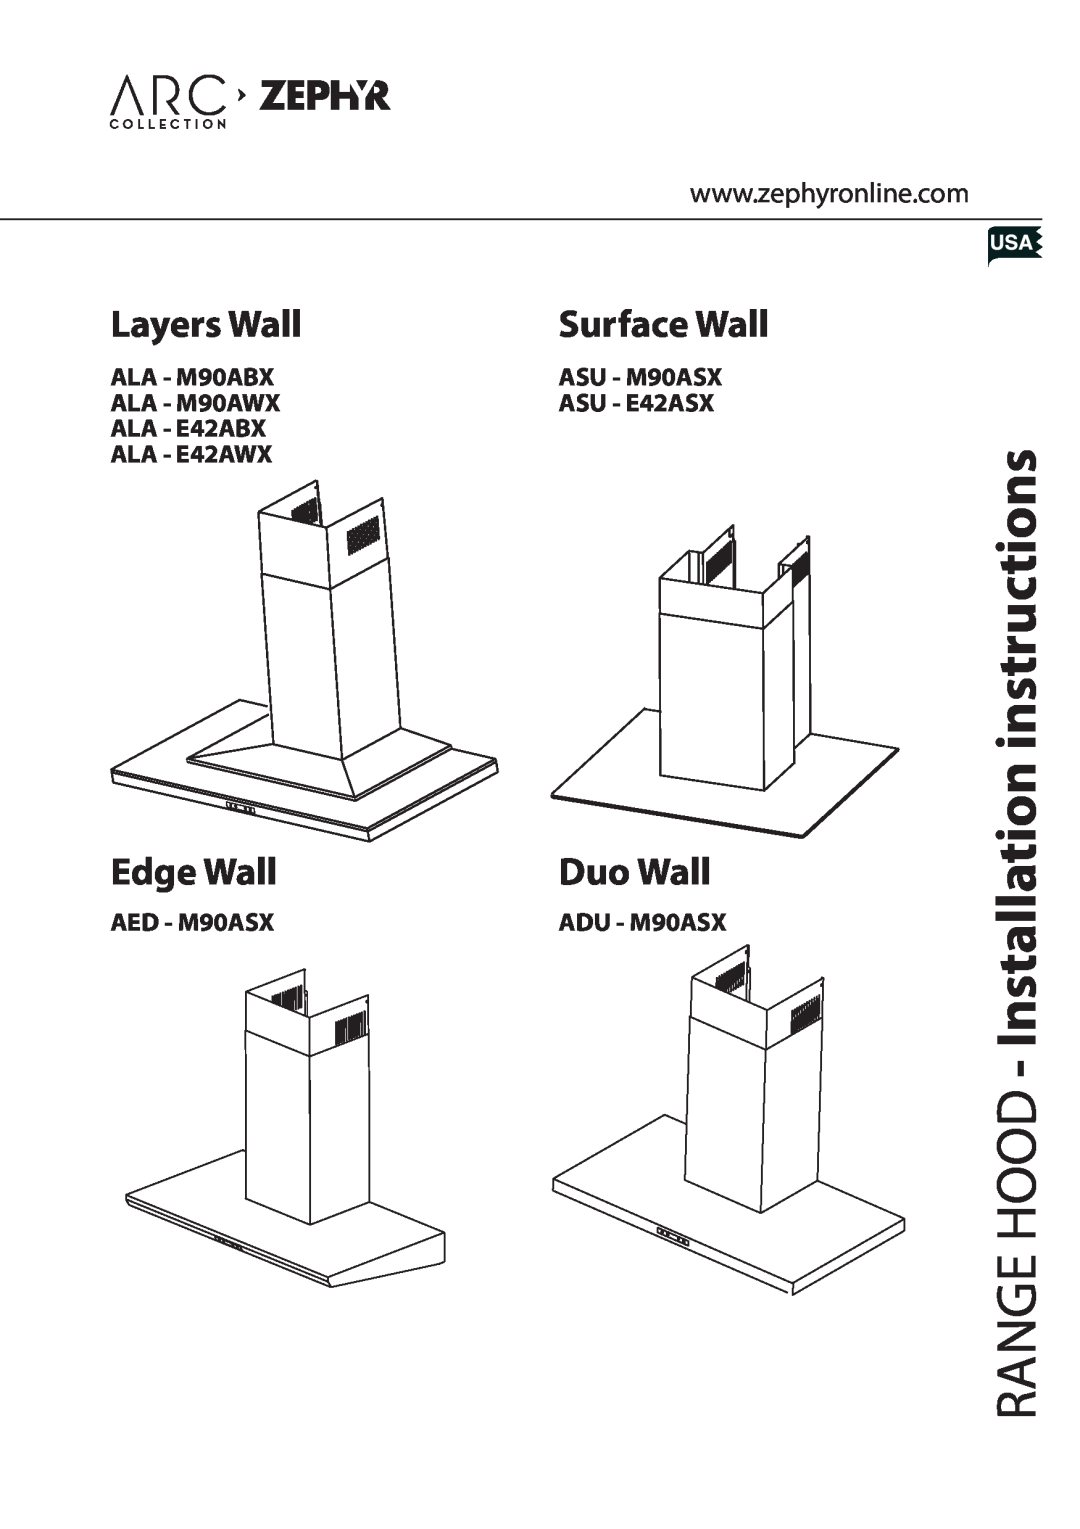 Zephyr ASU - E42ASX installation instructions Layers Wall, Edge Wall, Duo Wall, ALA - M90ABX, ASU - M90ASX, ALA - M90AWX 